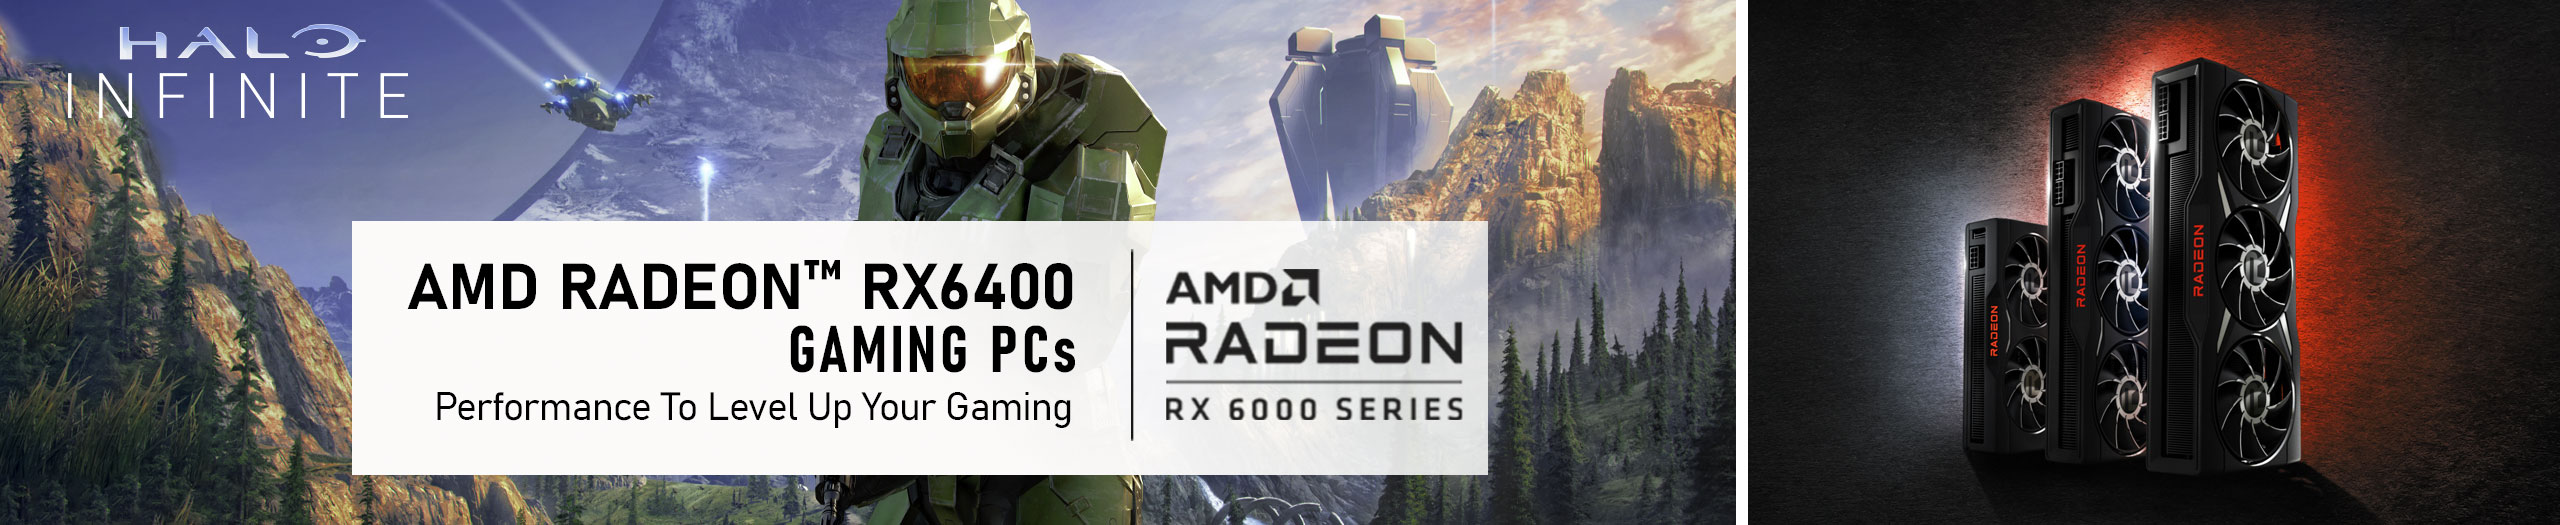 AMD Radeon RX 6400 Gaming PCs